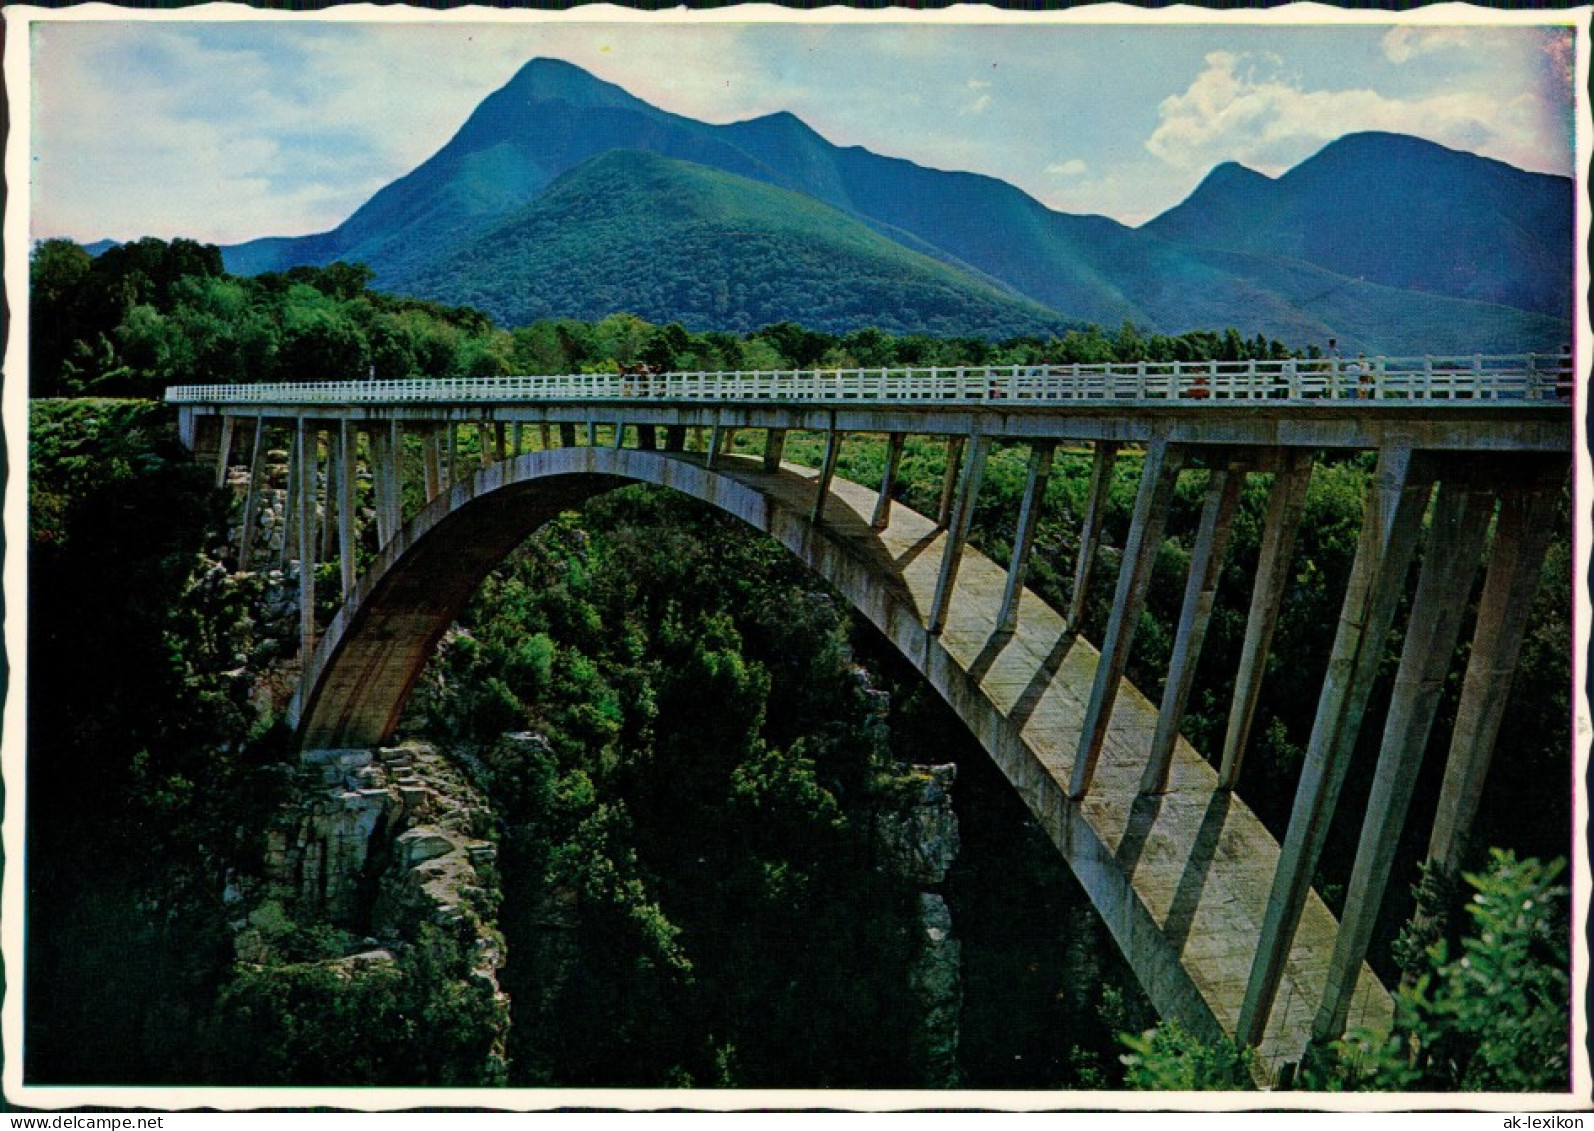 Stormsrivier-Kou-Kamma Paul Sauer Bridge, Storms River Bridge, Garten Route 1980 - South Africa